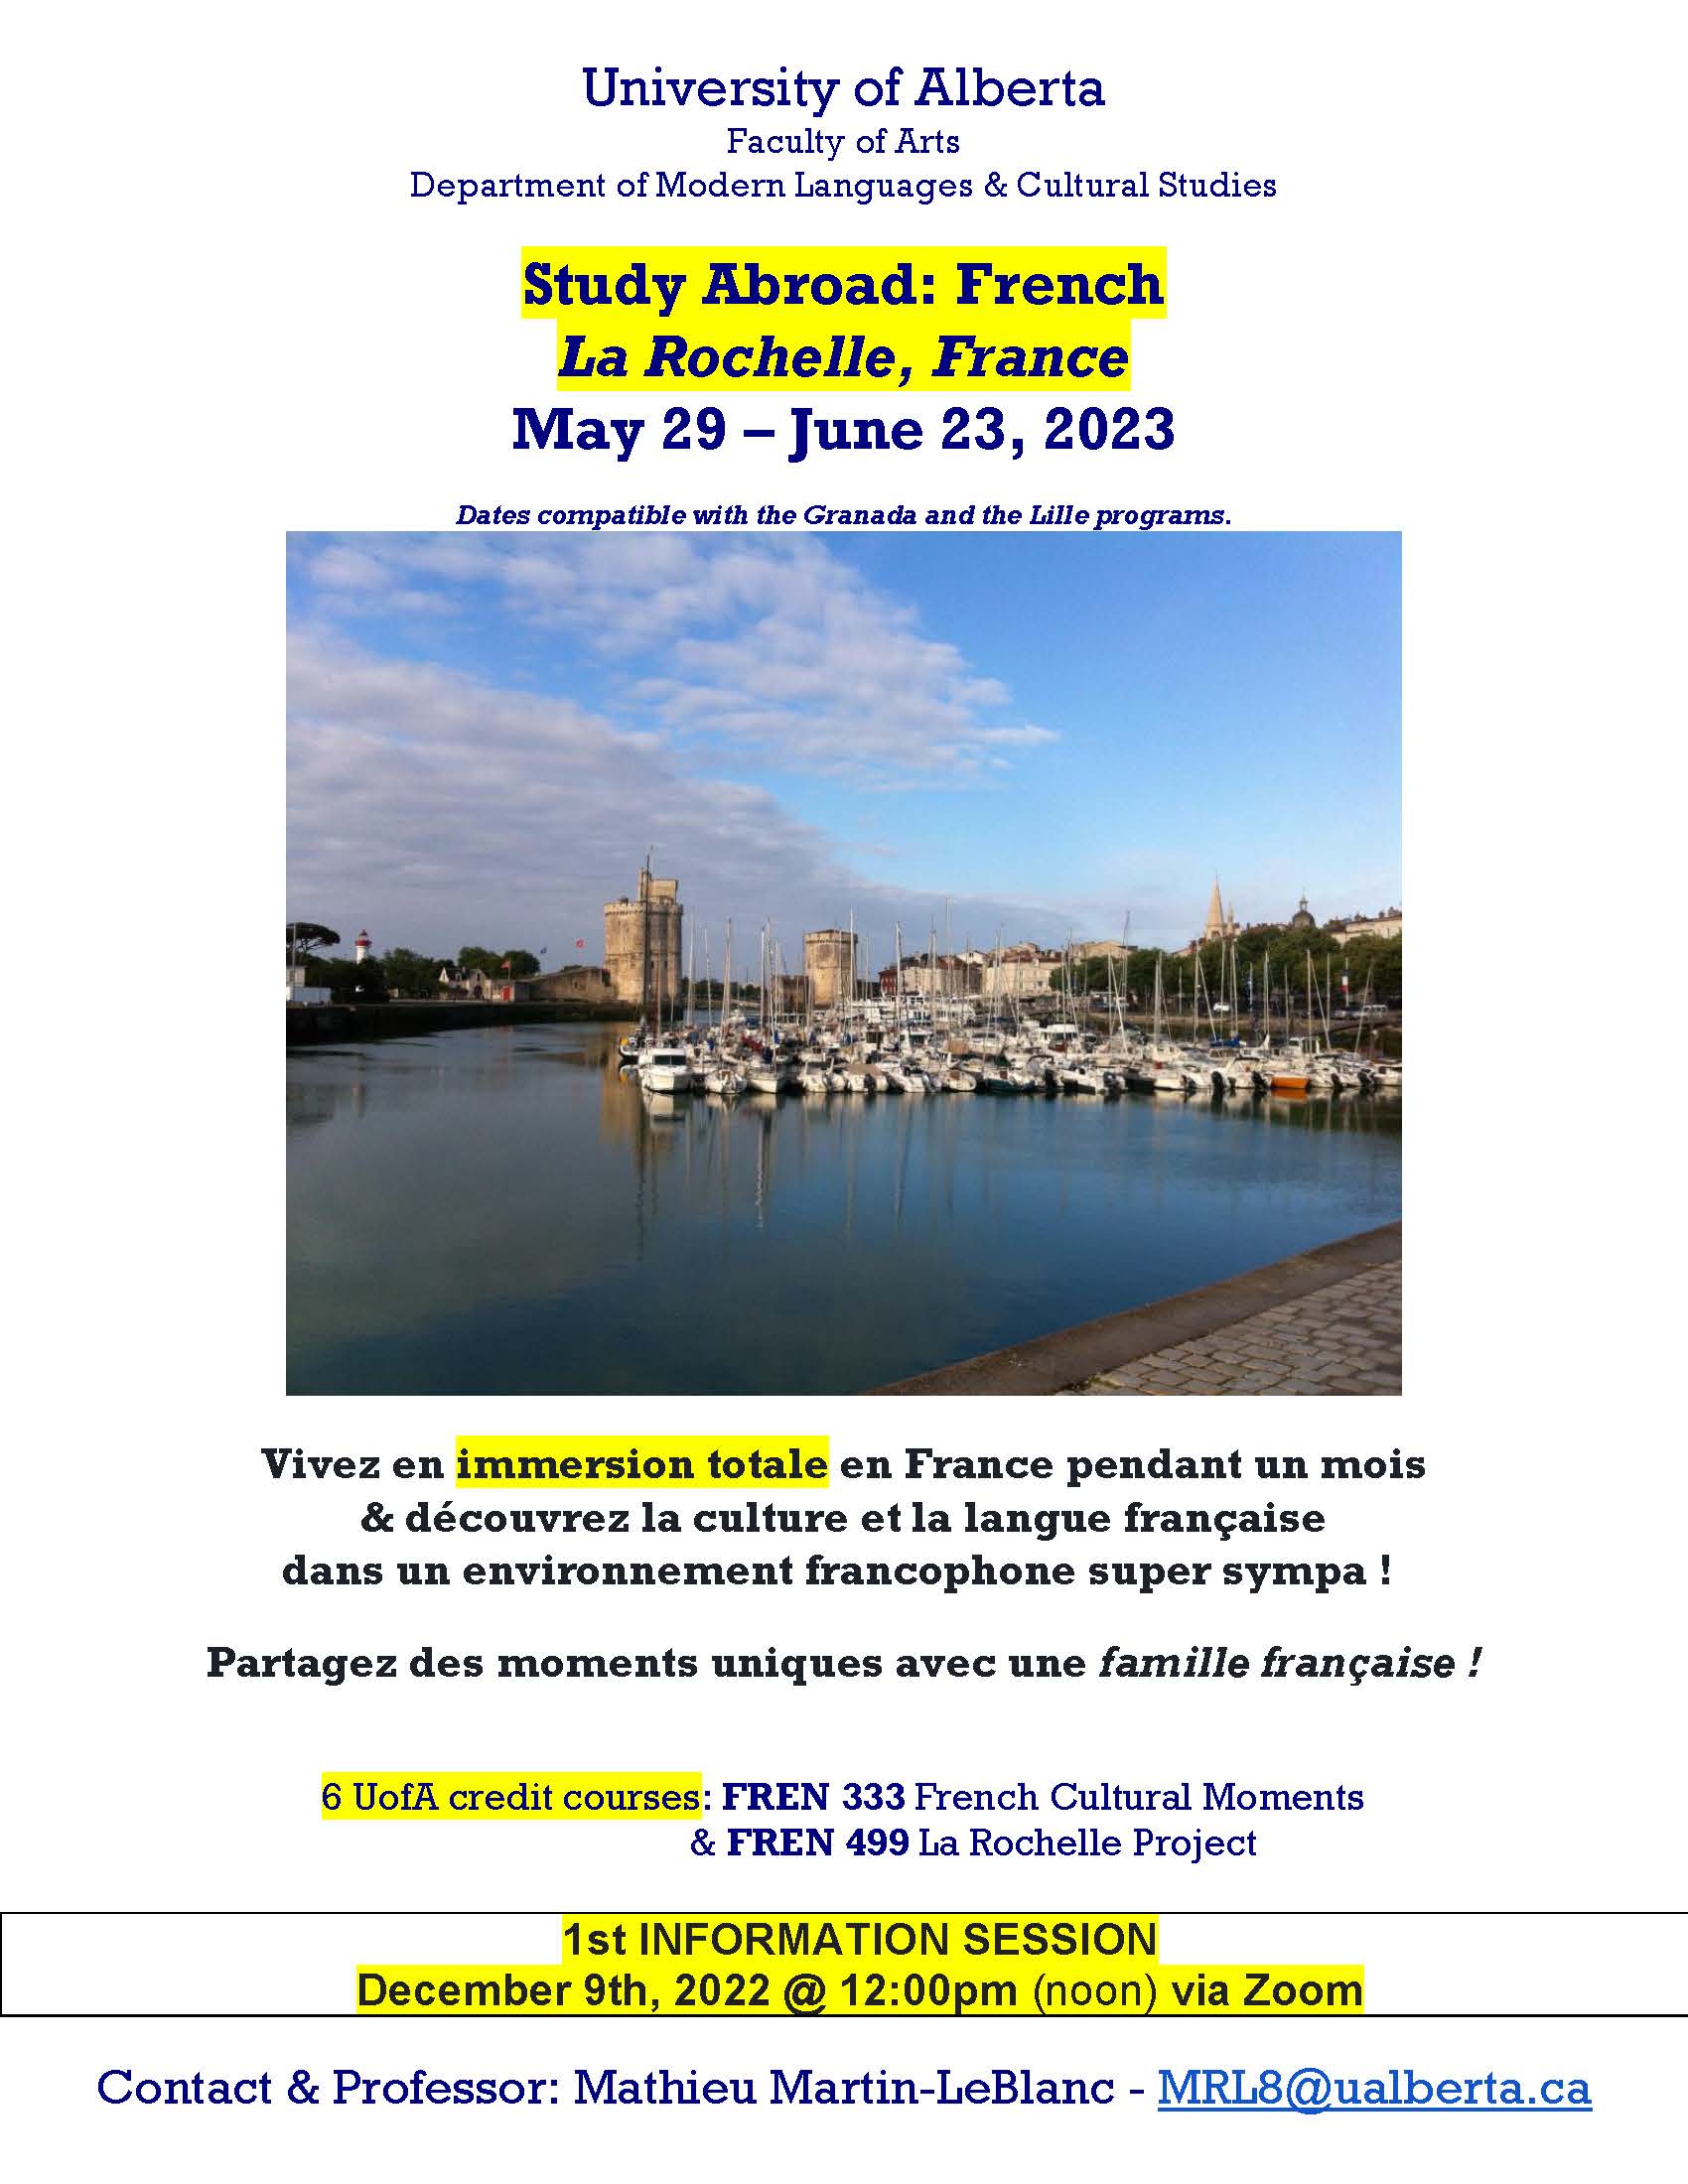 Study Abroad - La Rochelle information